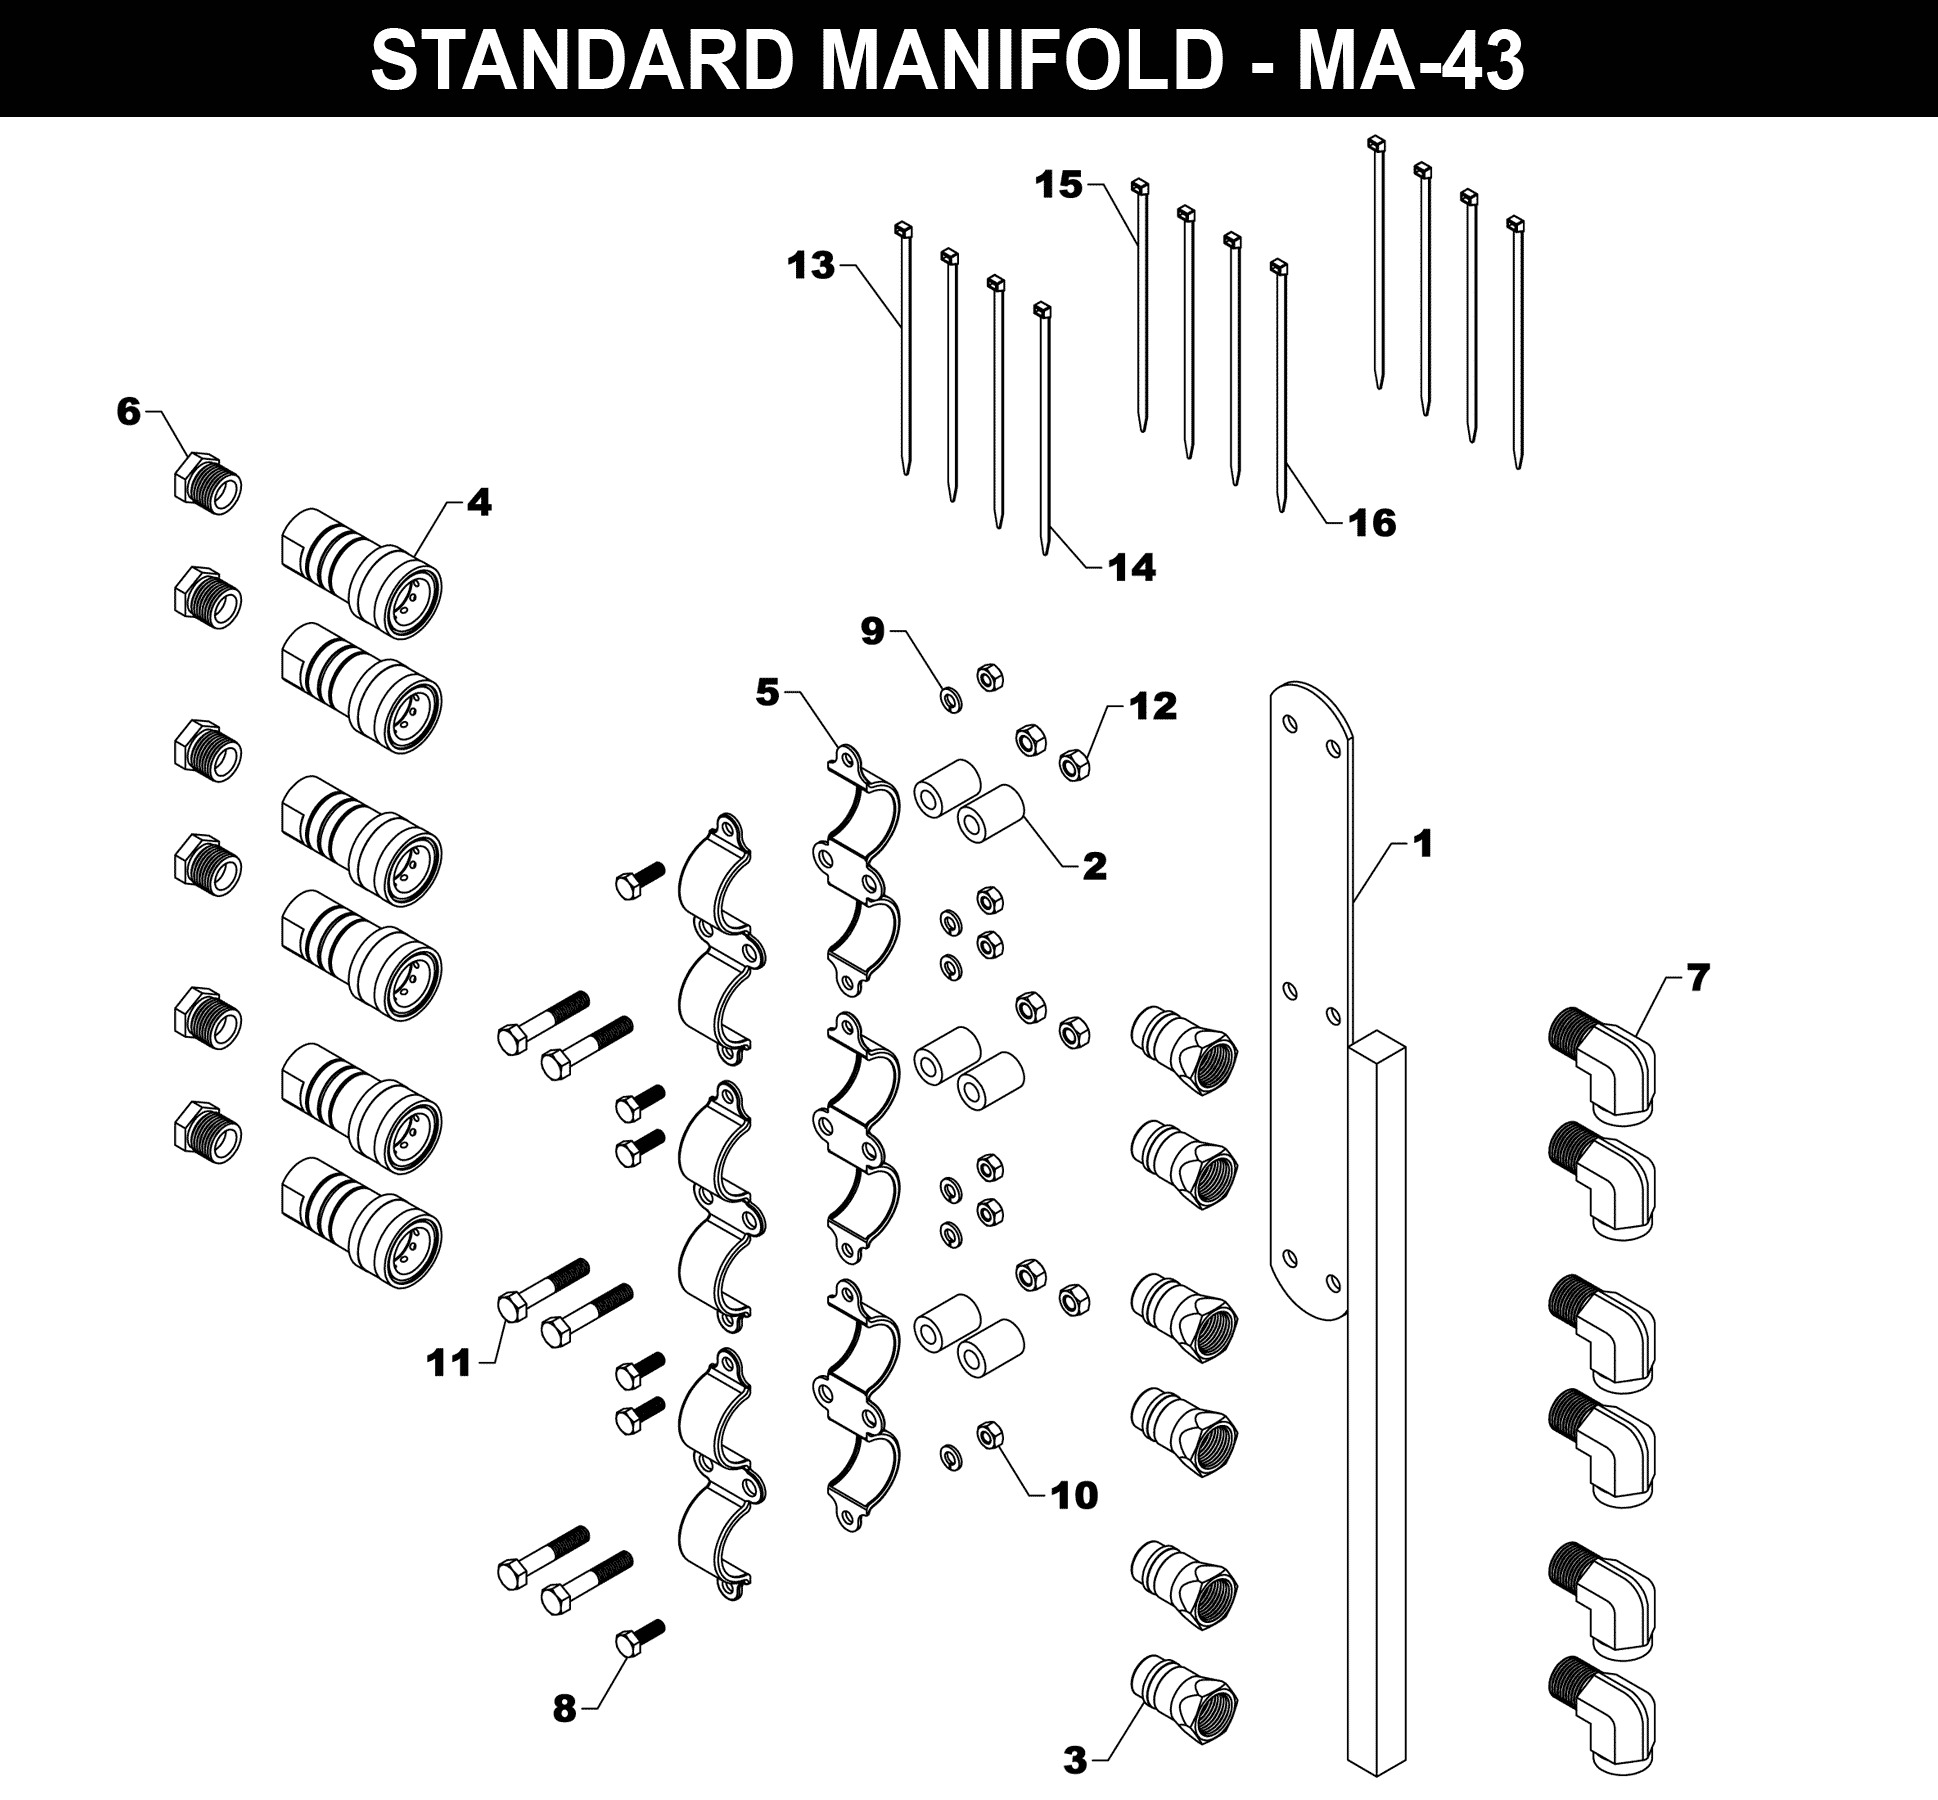 Standard Manifold - MA-43